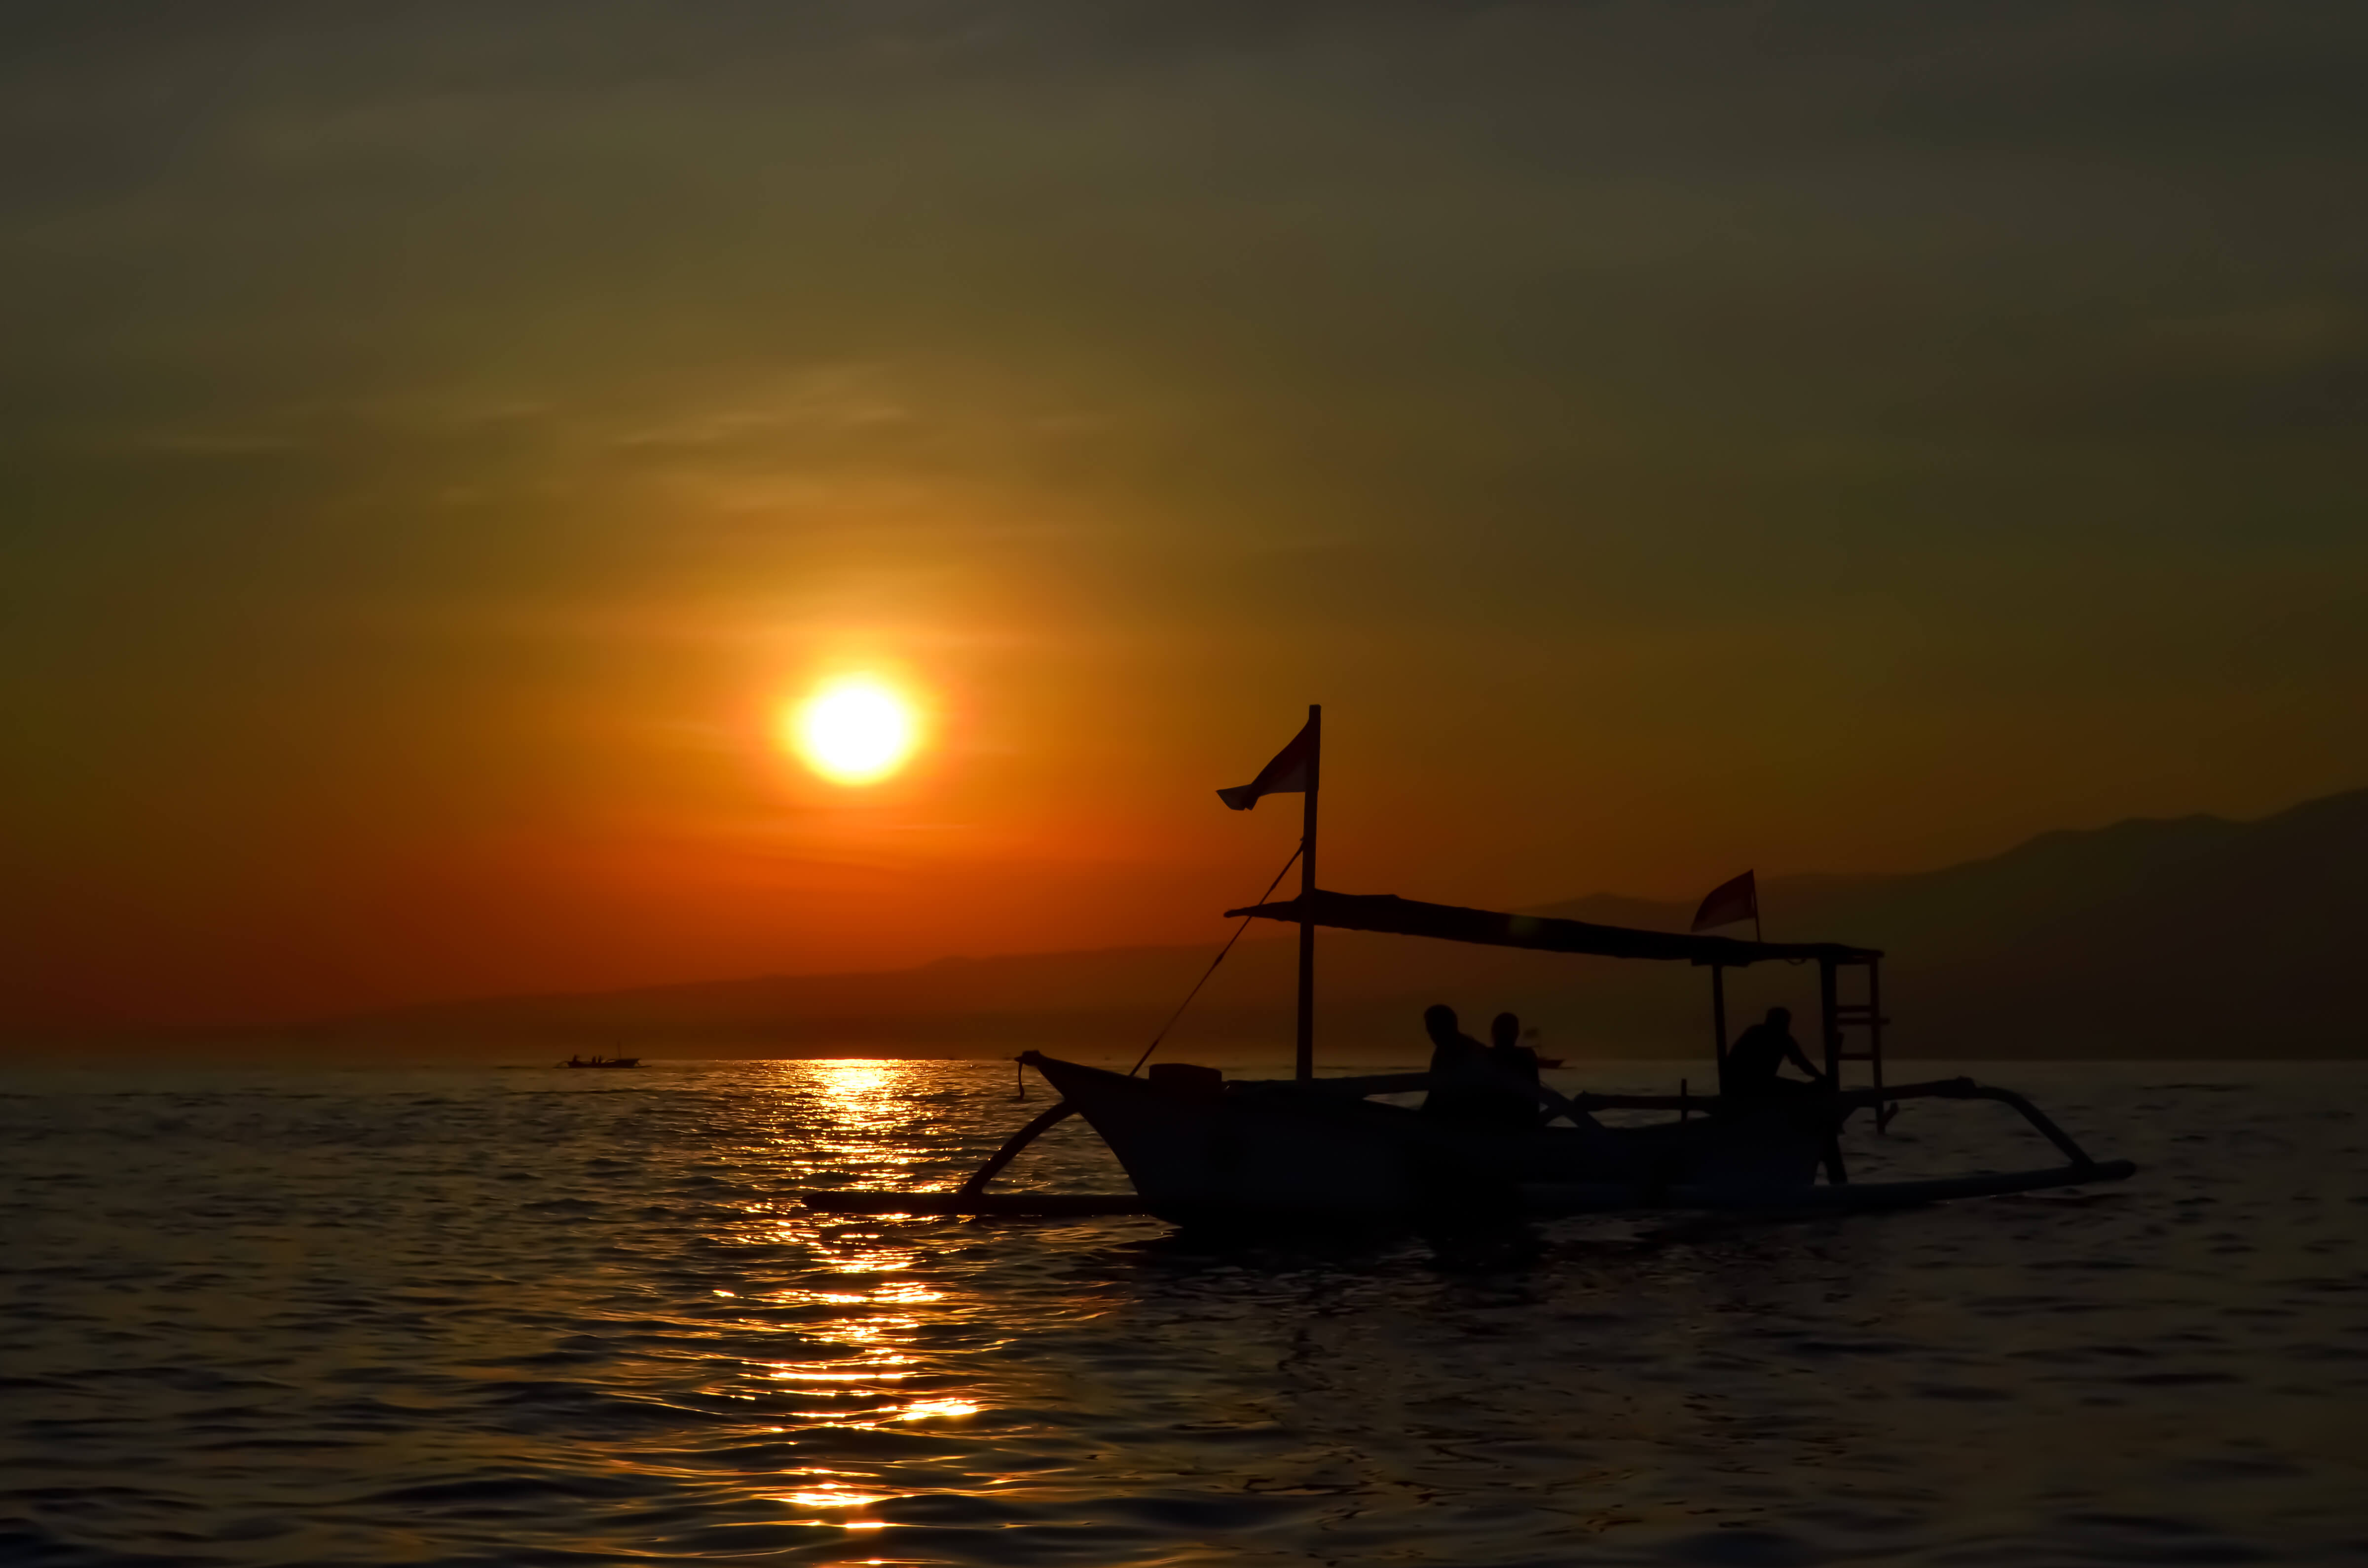 Bali Golden Tour - sunrise at Lovina beach in Northern Bali, Indonesia